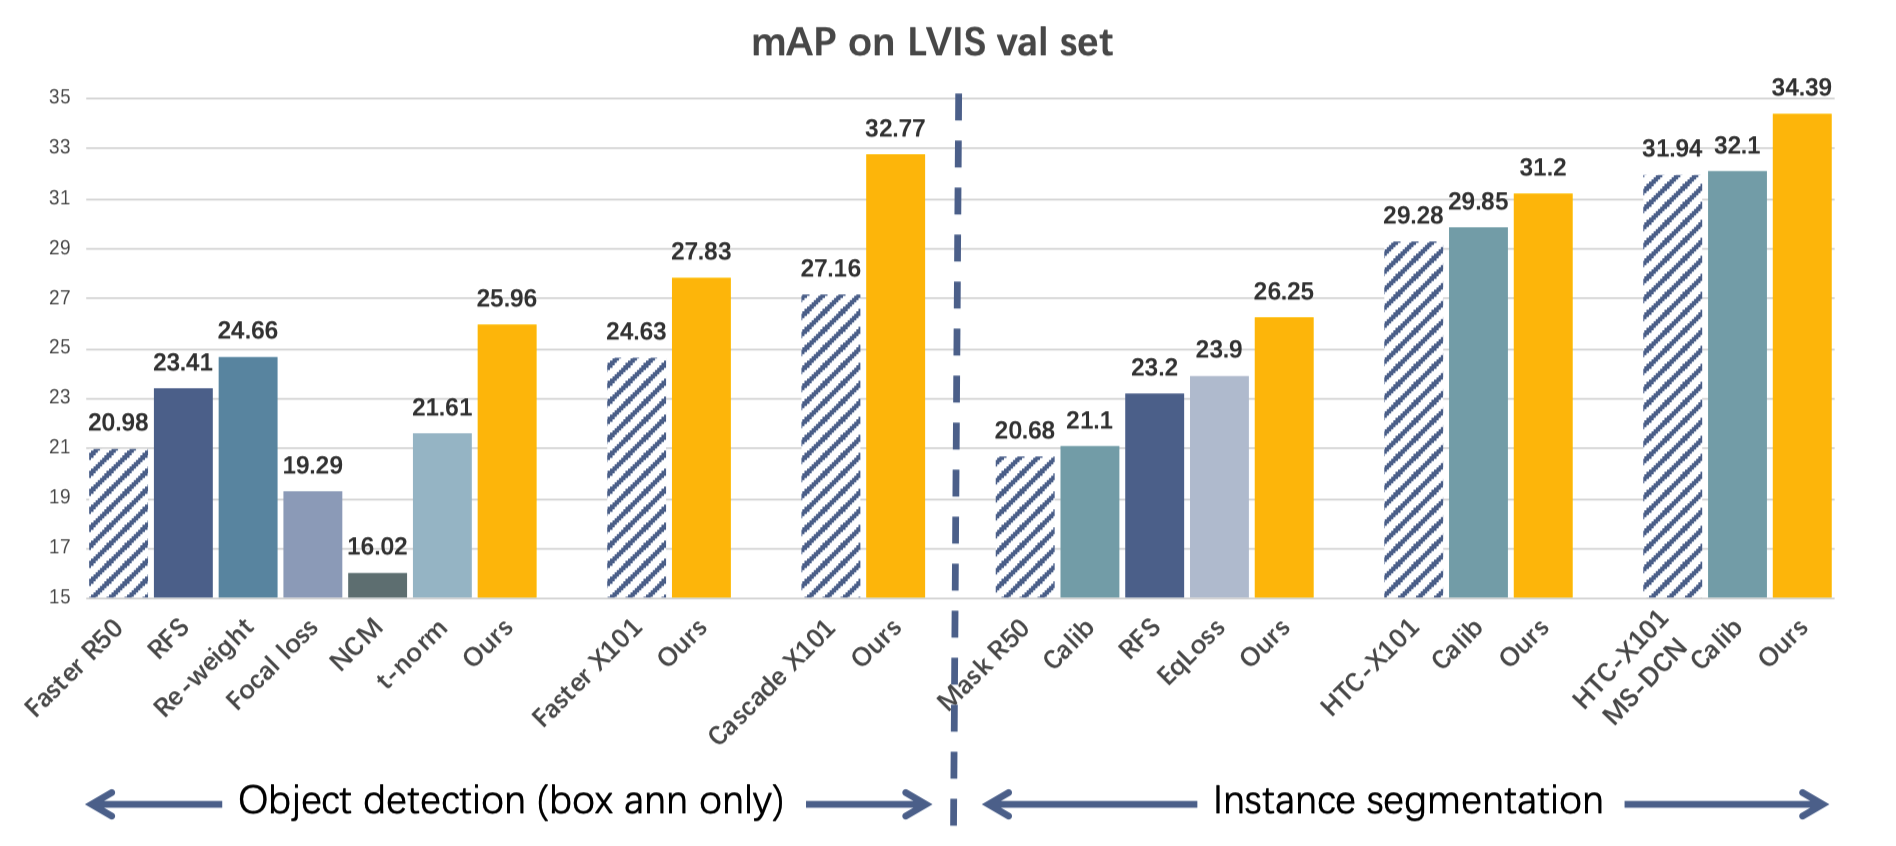 LVIS val results